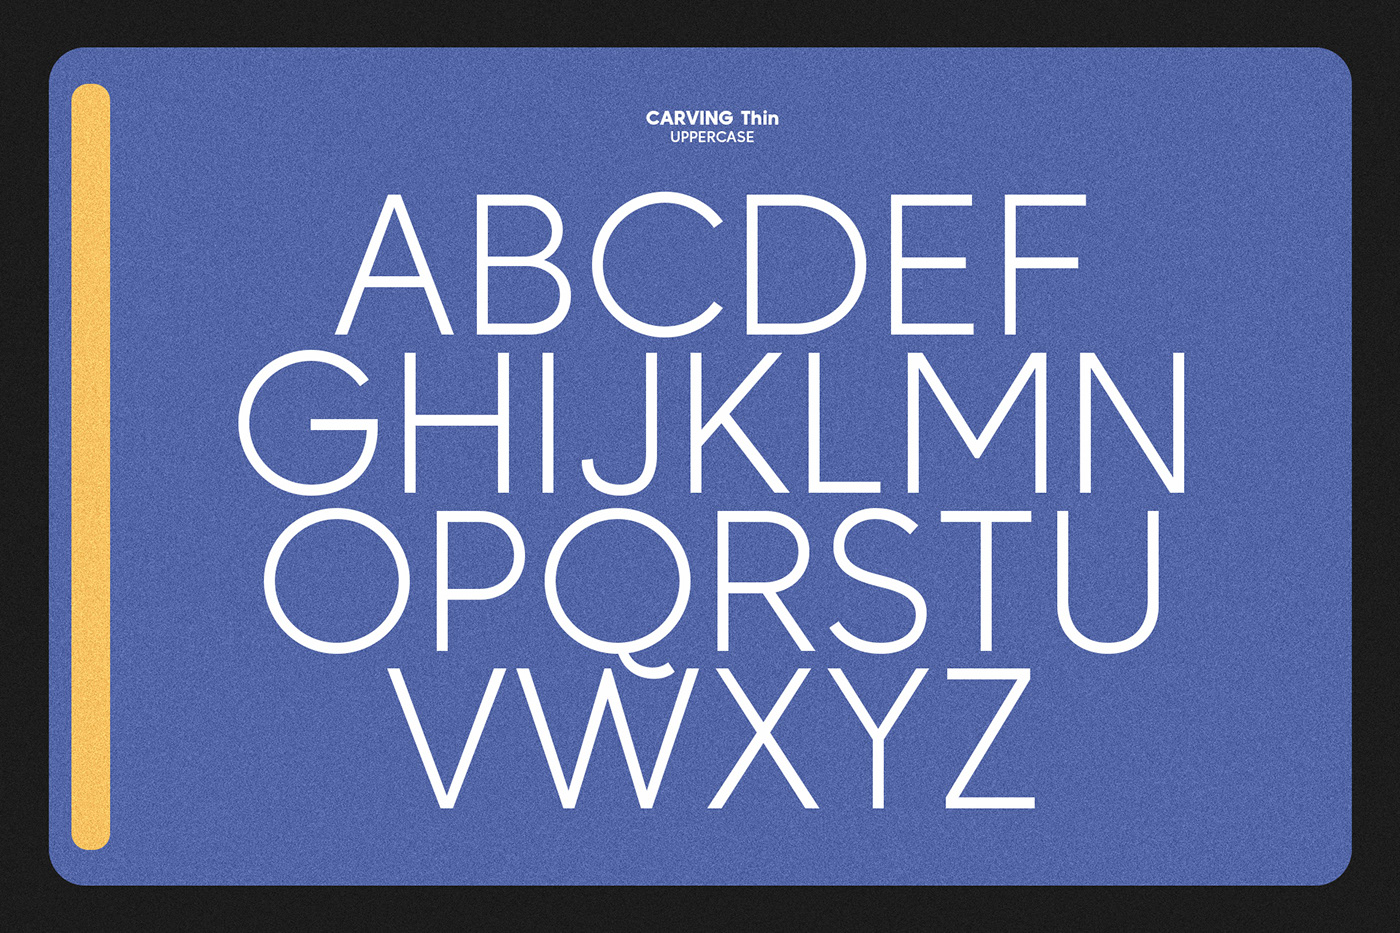 brand Classic font free Latin modern sans serif madetype multilingual logo